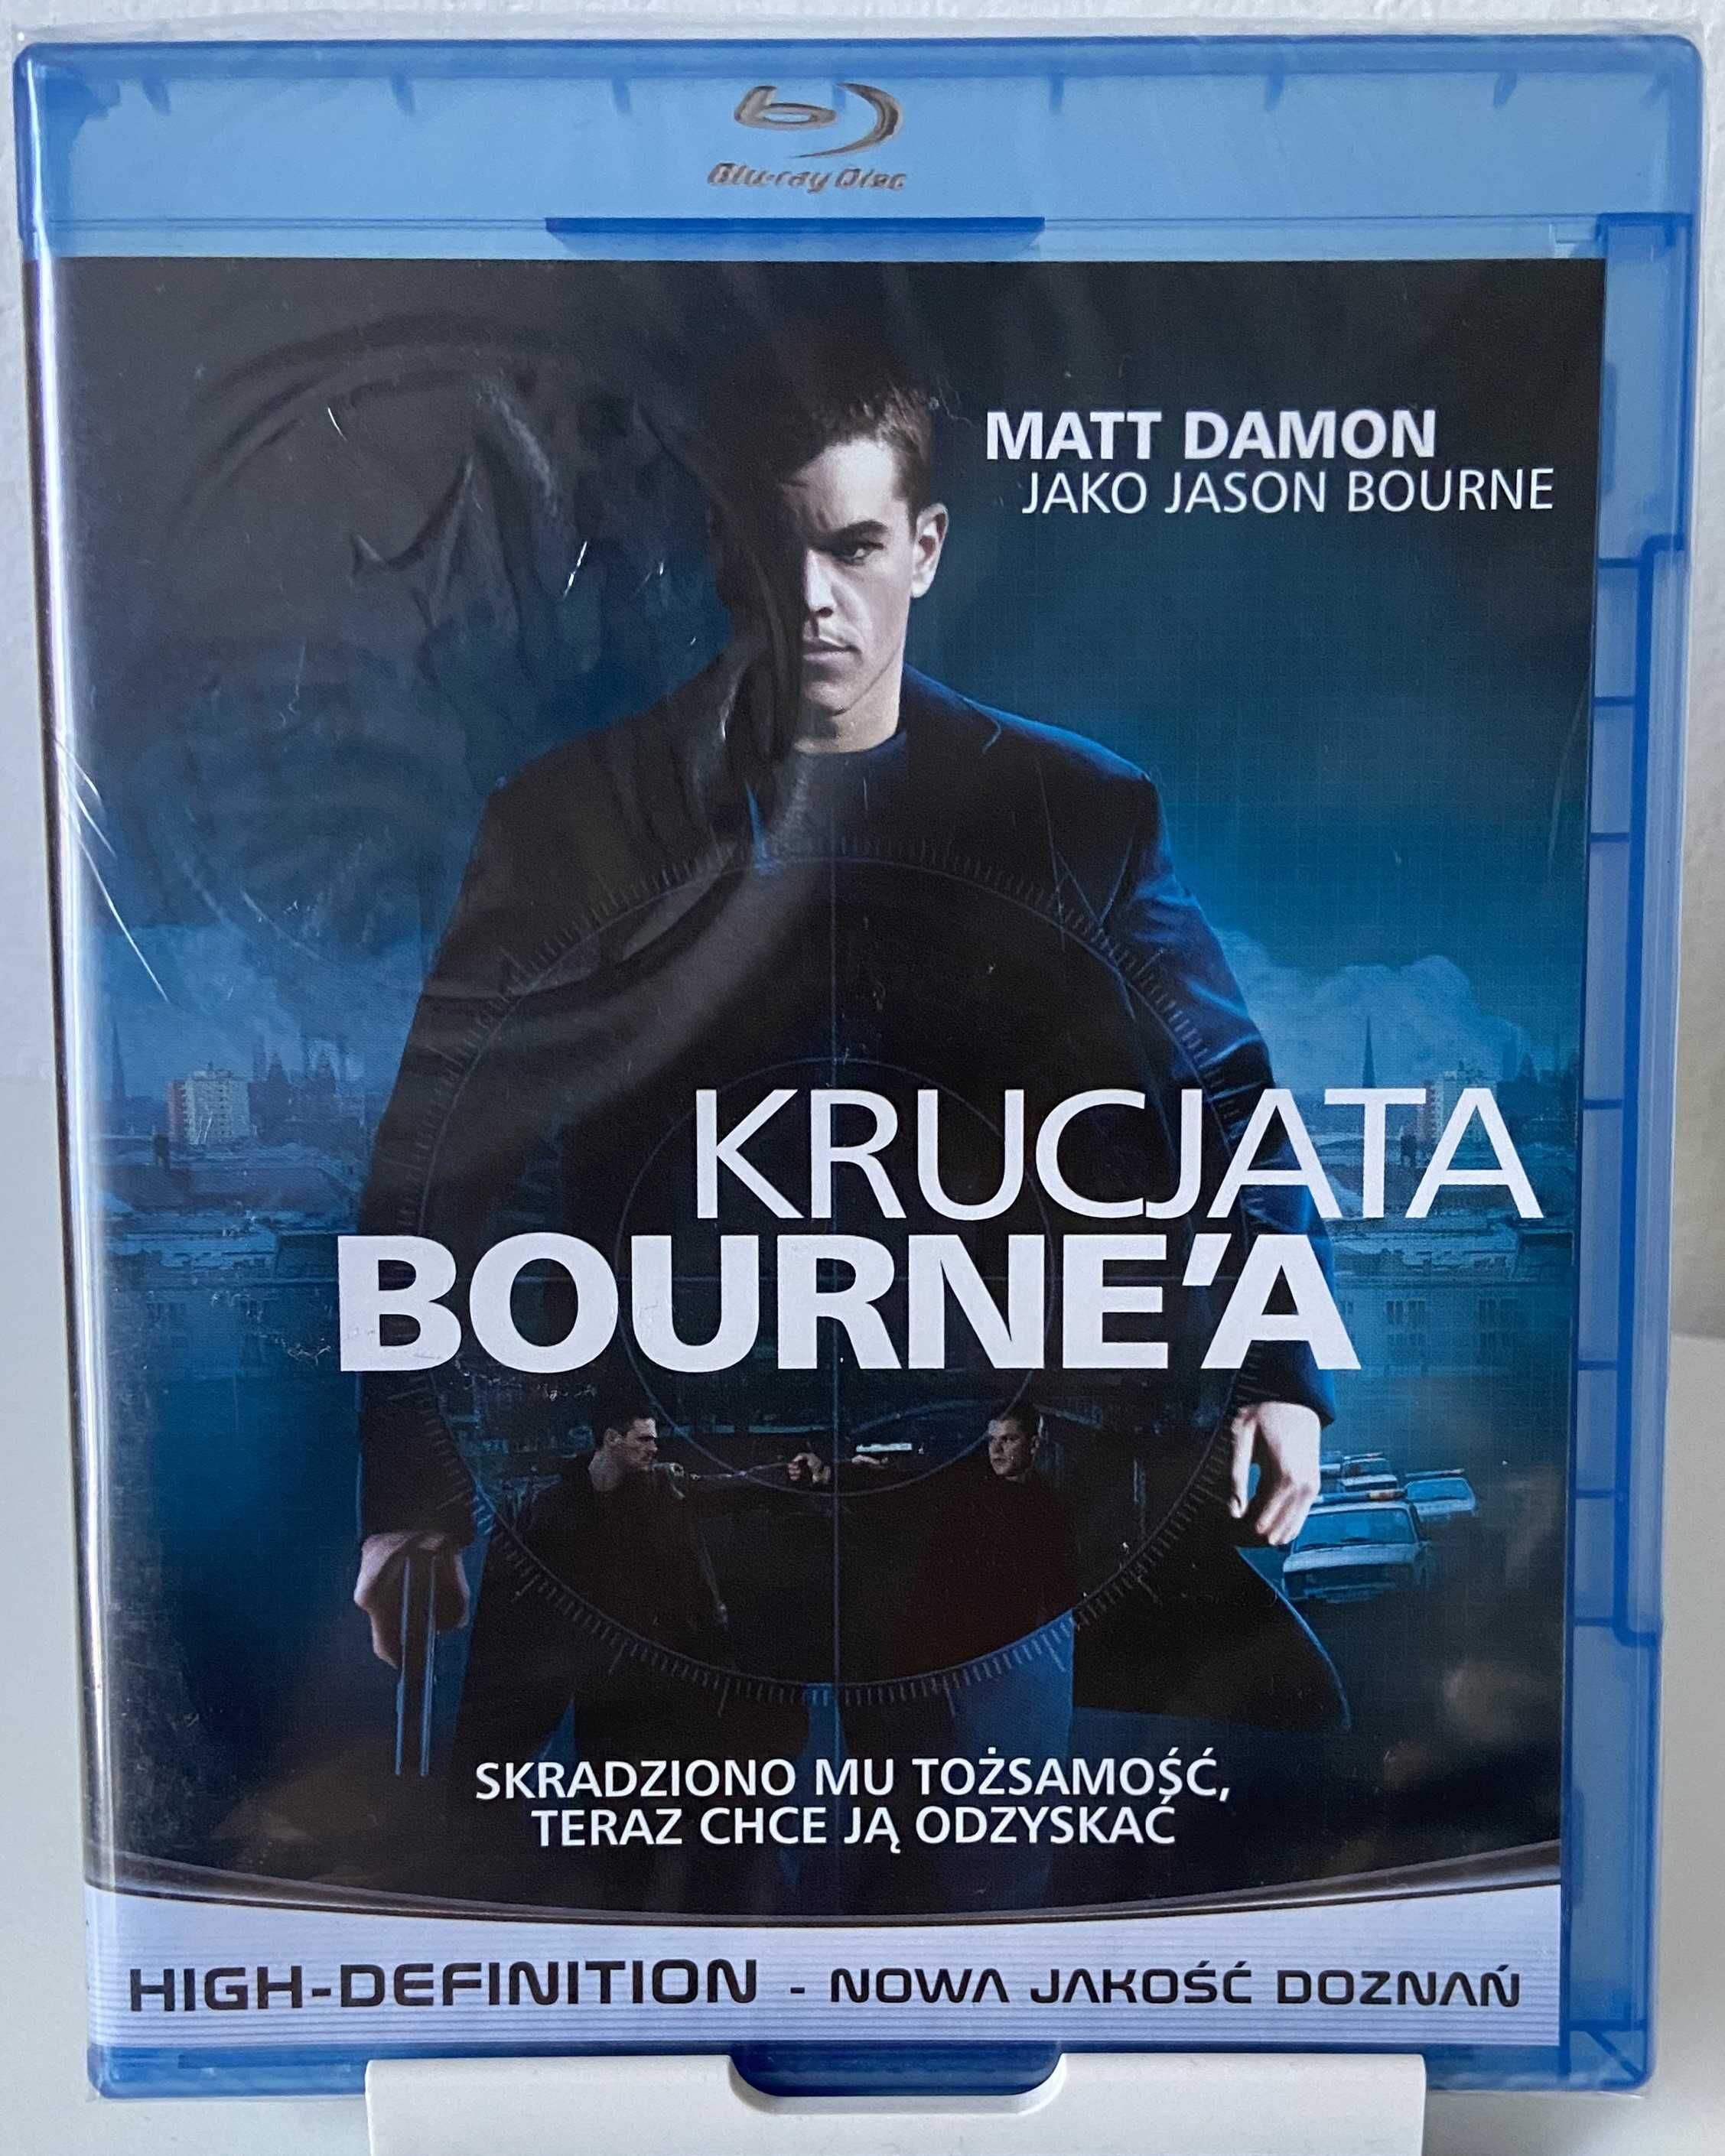 Krucjata Bourne'a Blu-ray